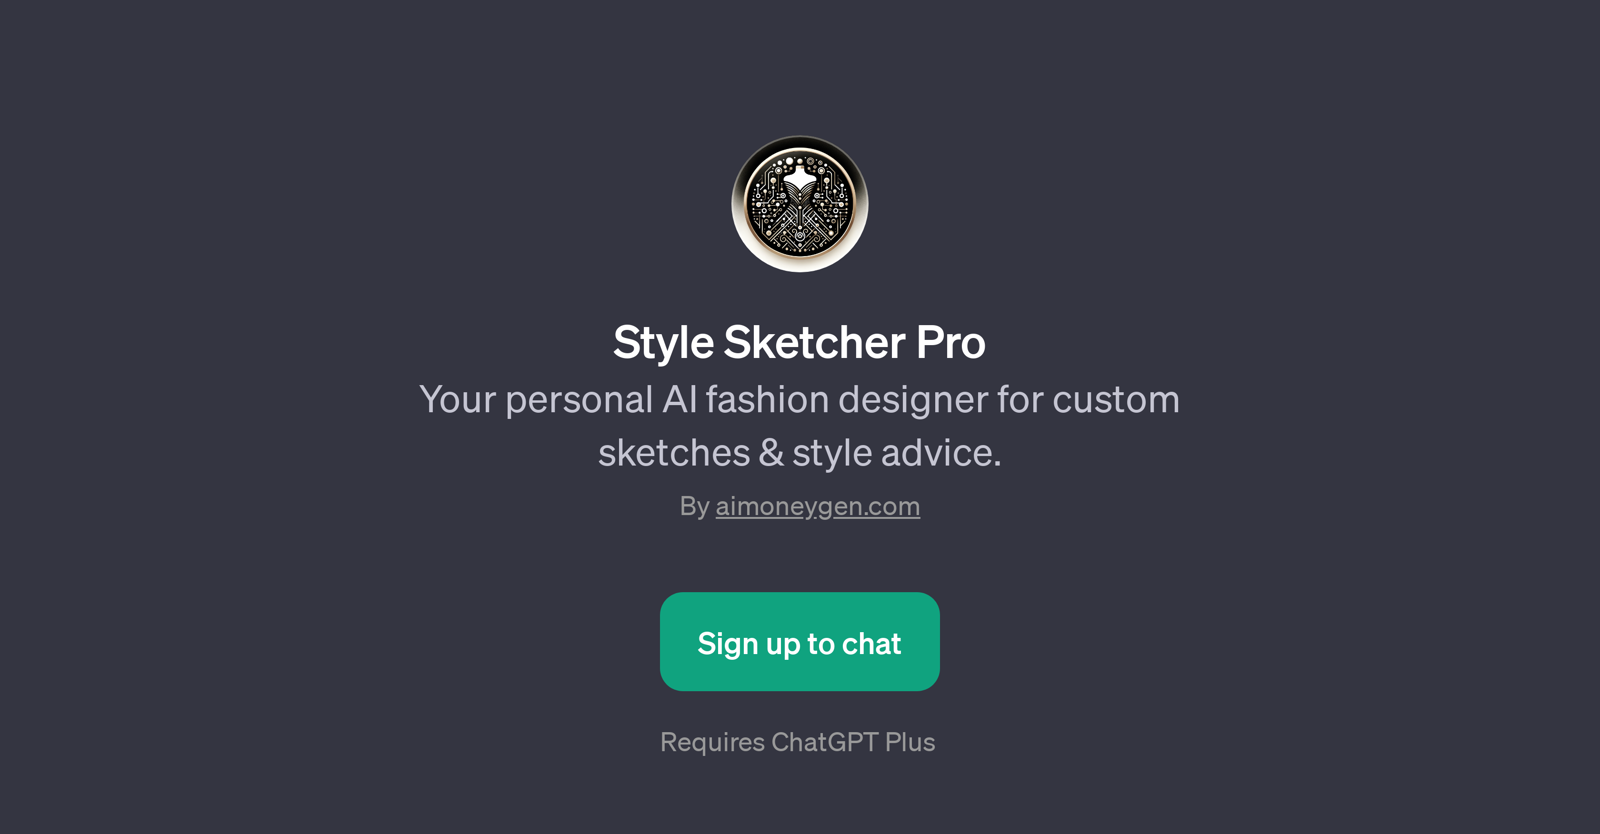 Style Sketcher Pro website